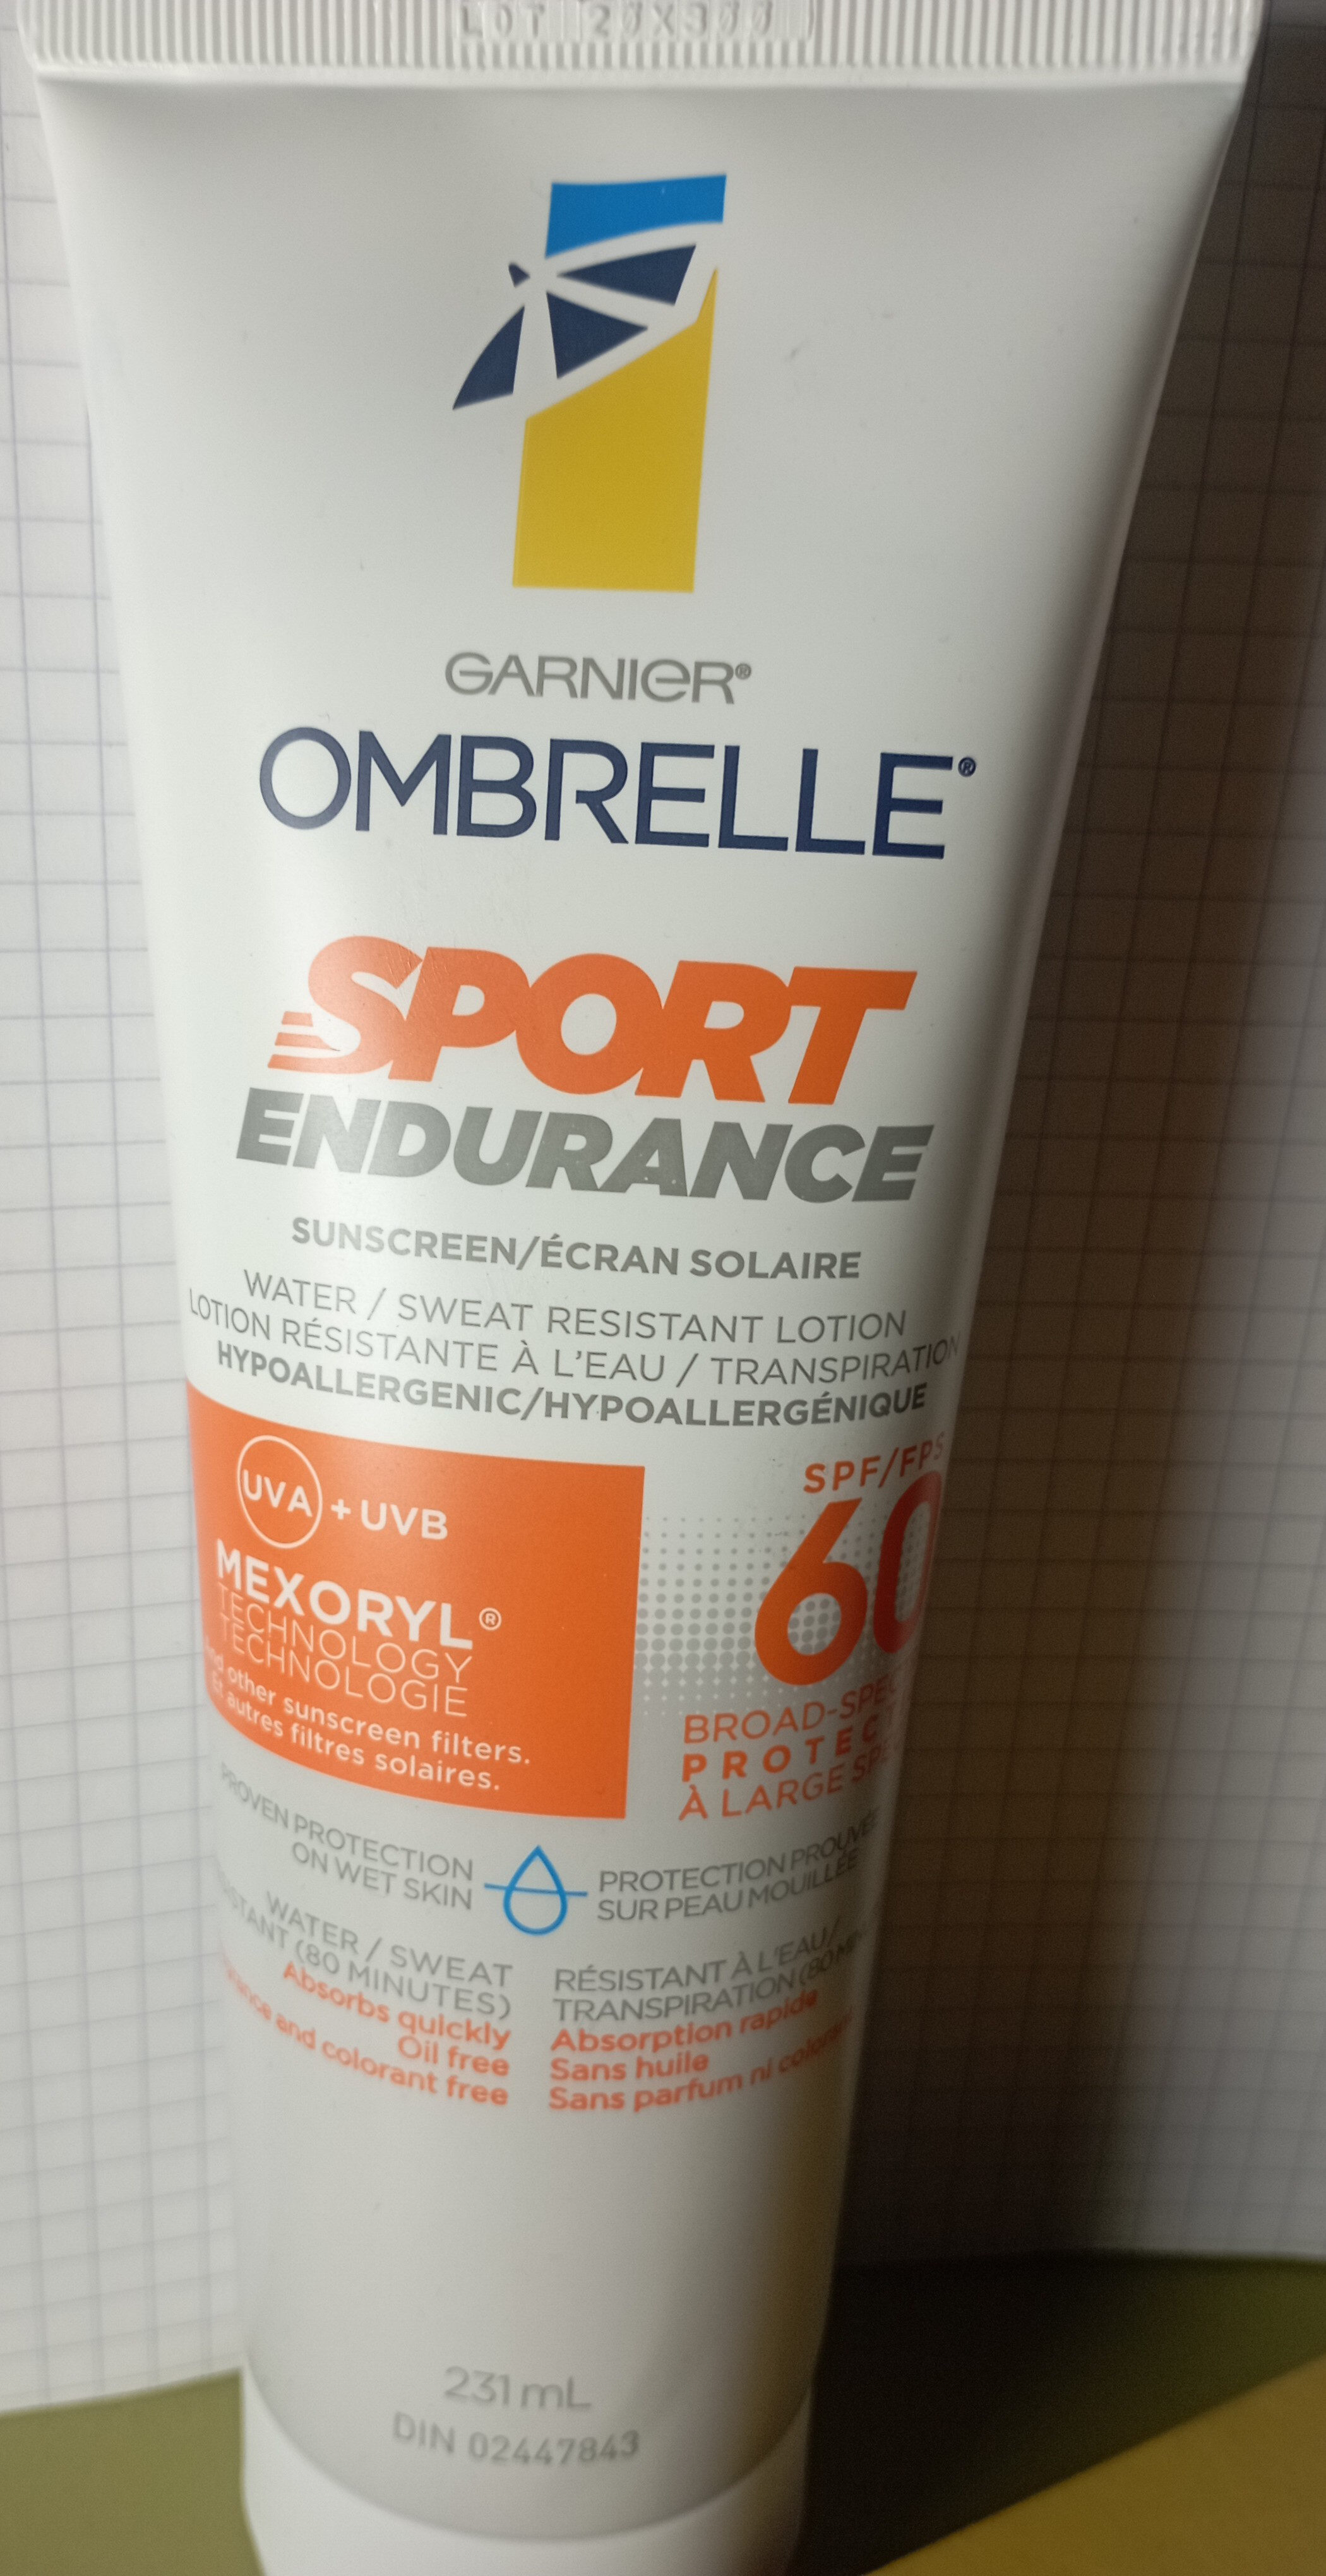 Ombrelle endurance sport - Produkt - fr